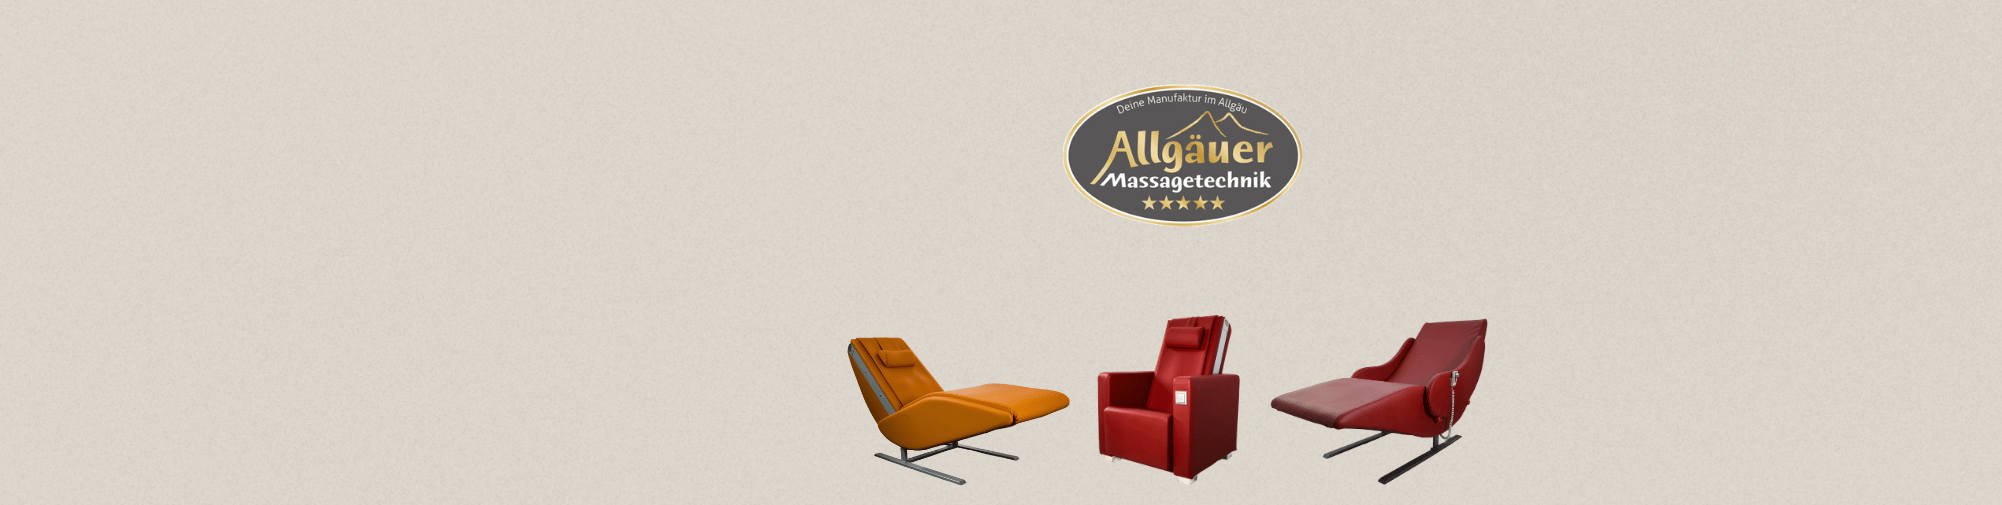 Allgäuer Massagetechnik - Thế giới ghế massage